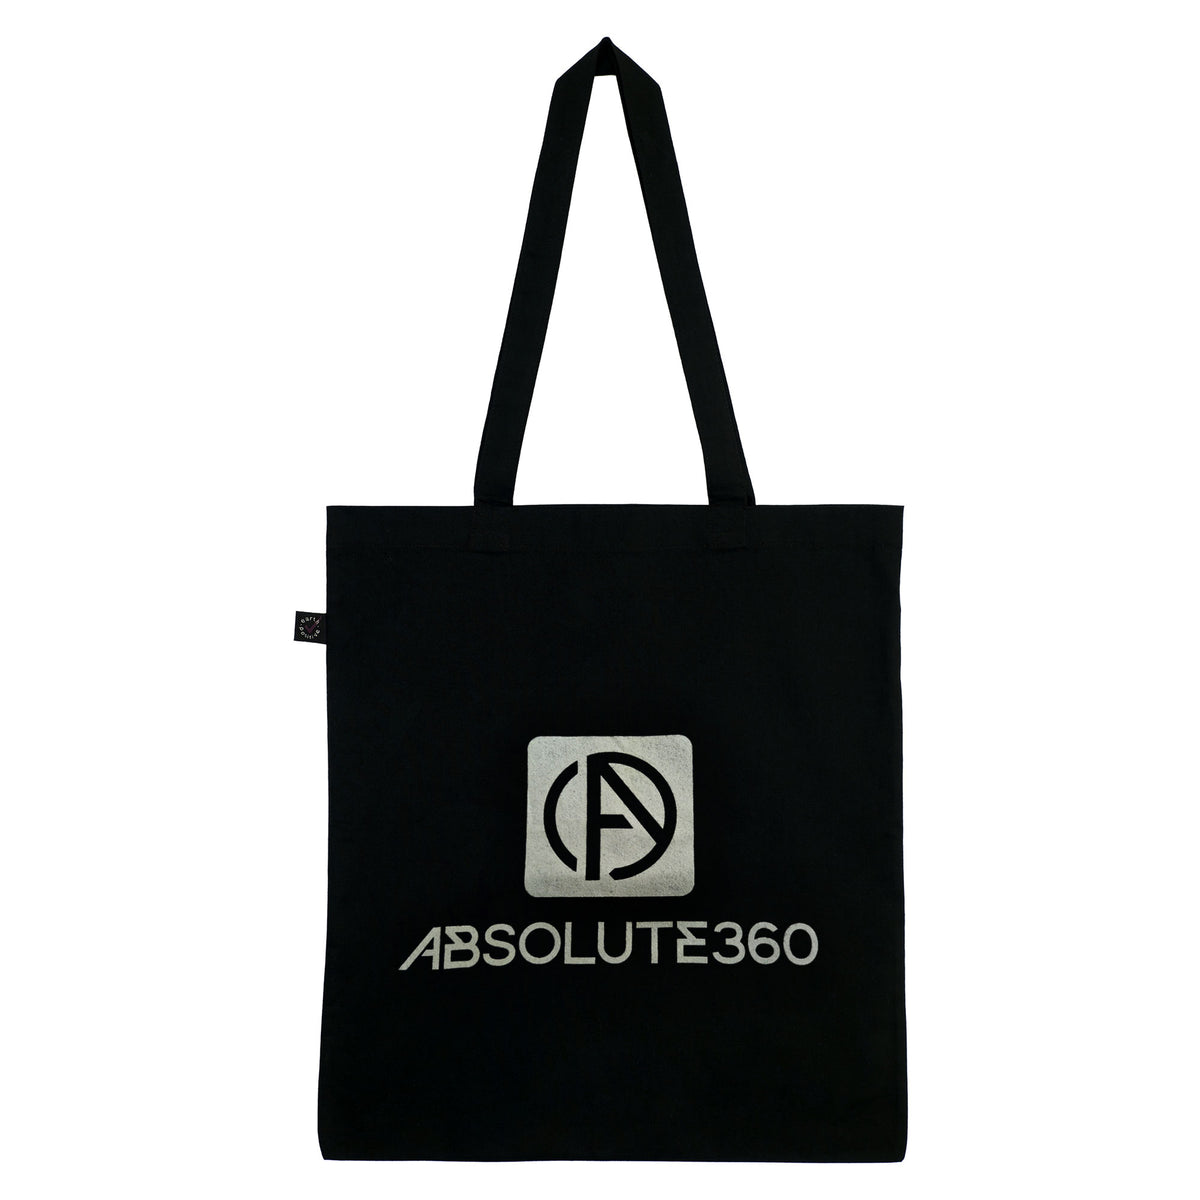 ABSOLUTE360 Logo tote bag in black